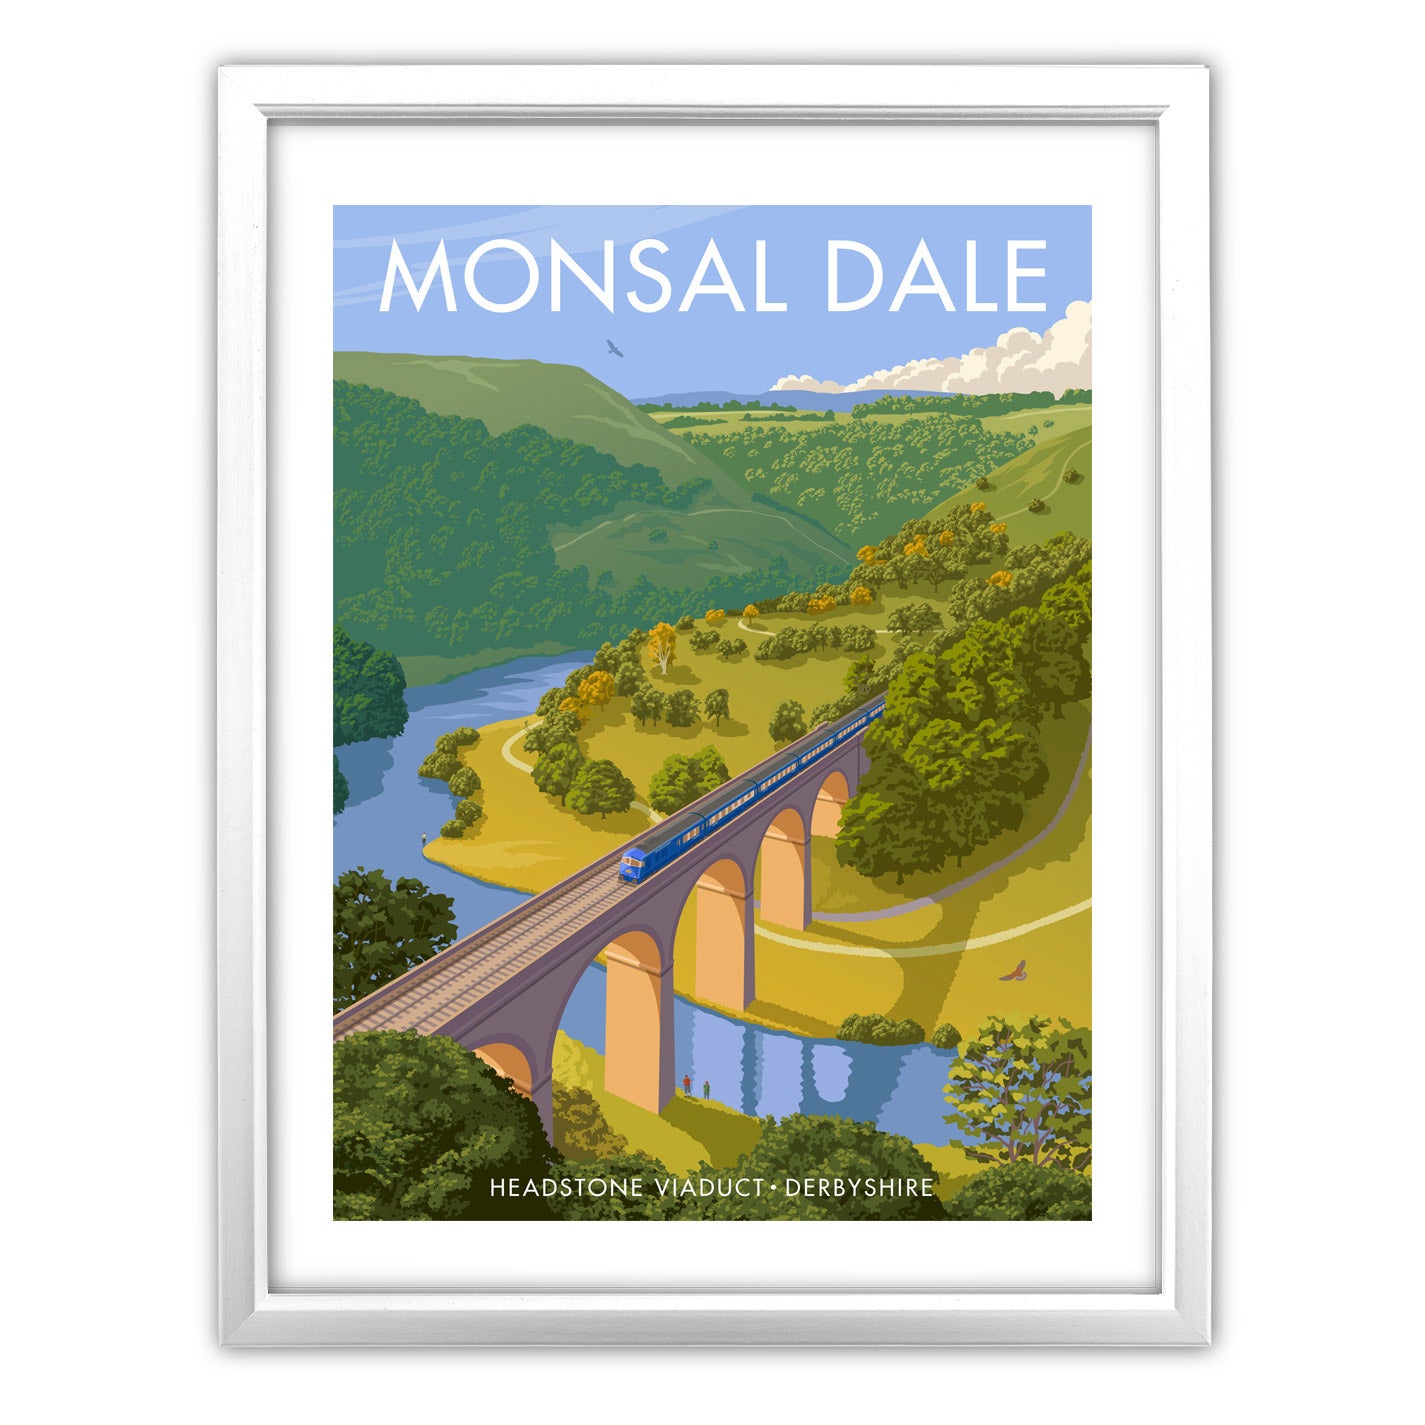 Headstone Viaduct, Monsal Dale Art Print